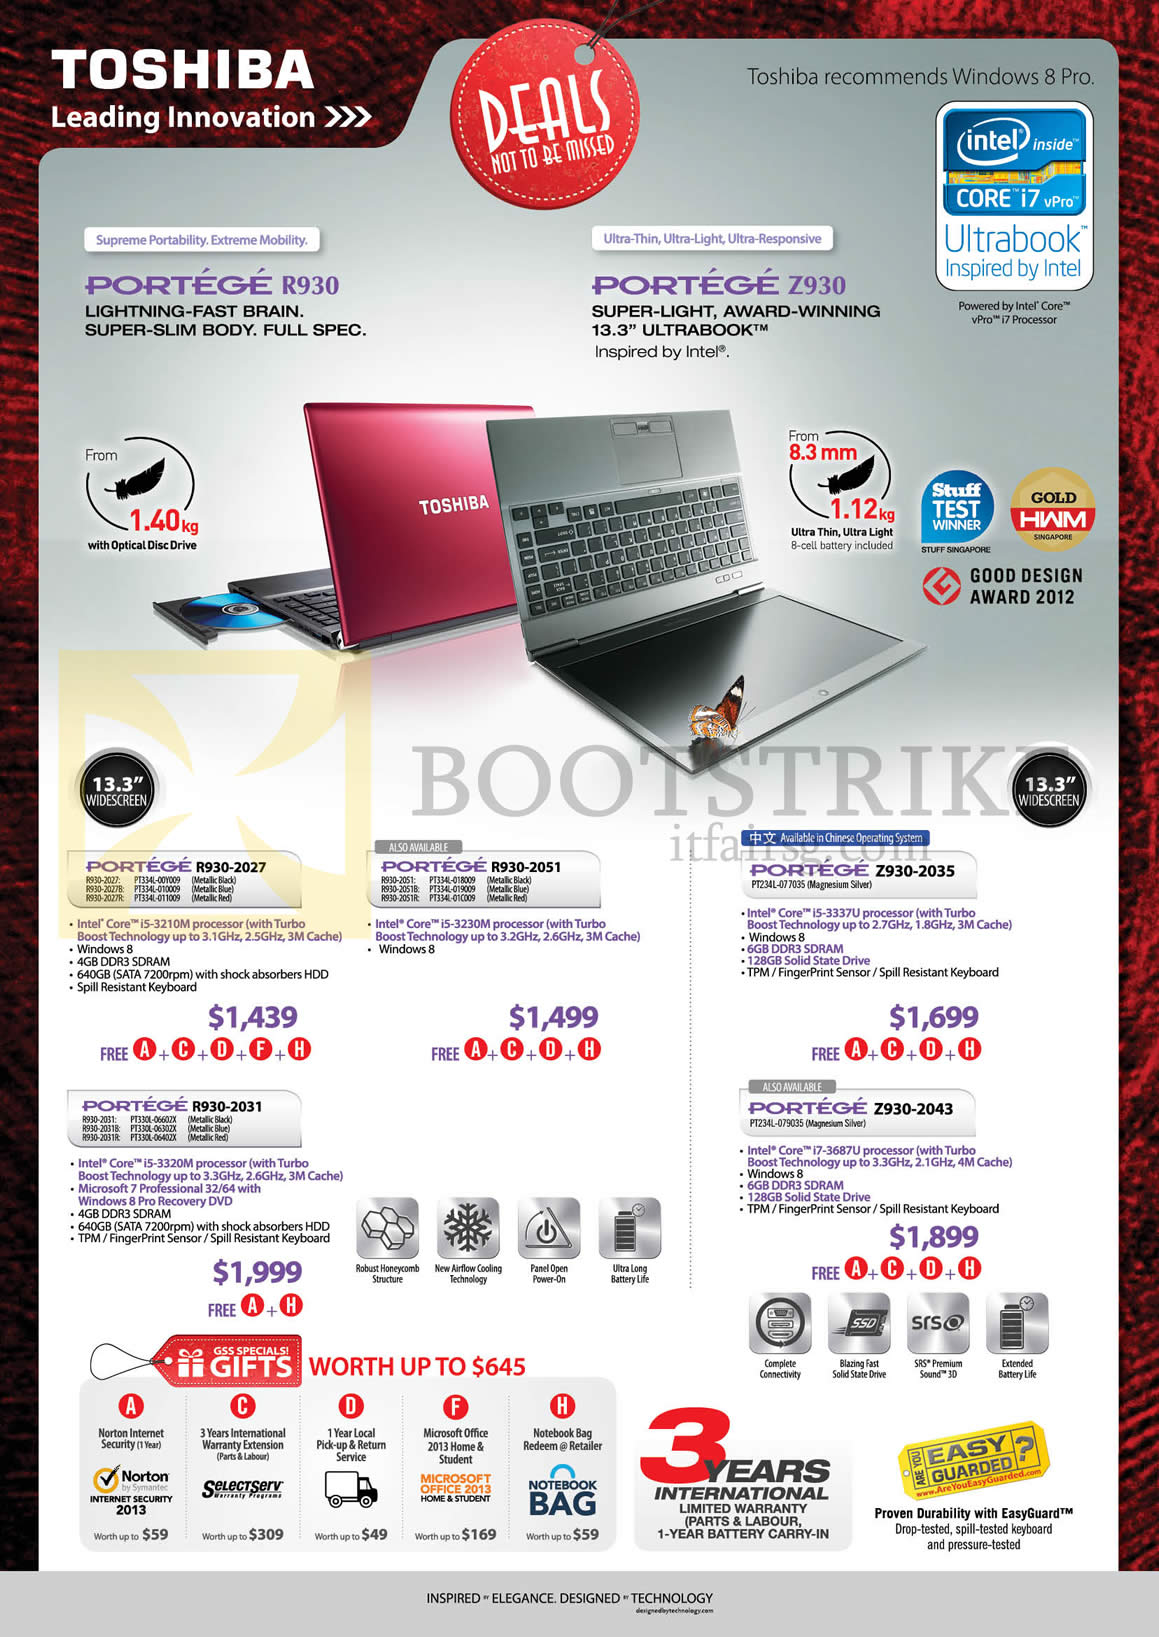 PC SHOW 2013 price list image brochure of Toshiba Notebooks Portege R930-2027, 2051, 2031, Z930 2035, 2043